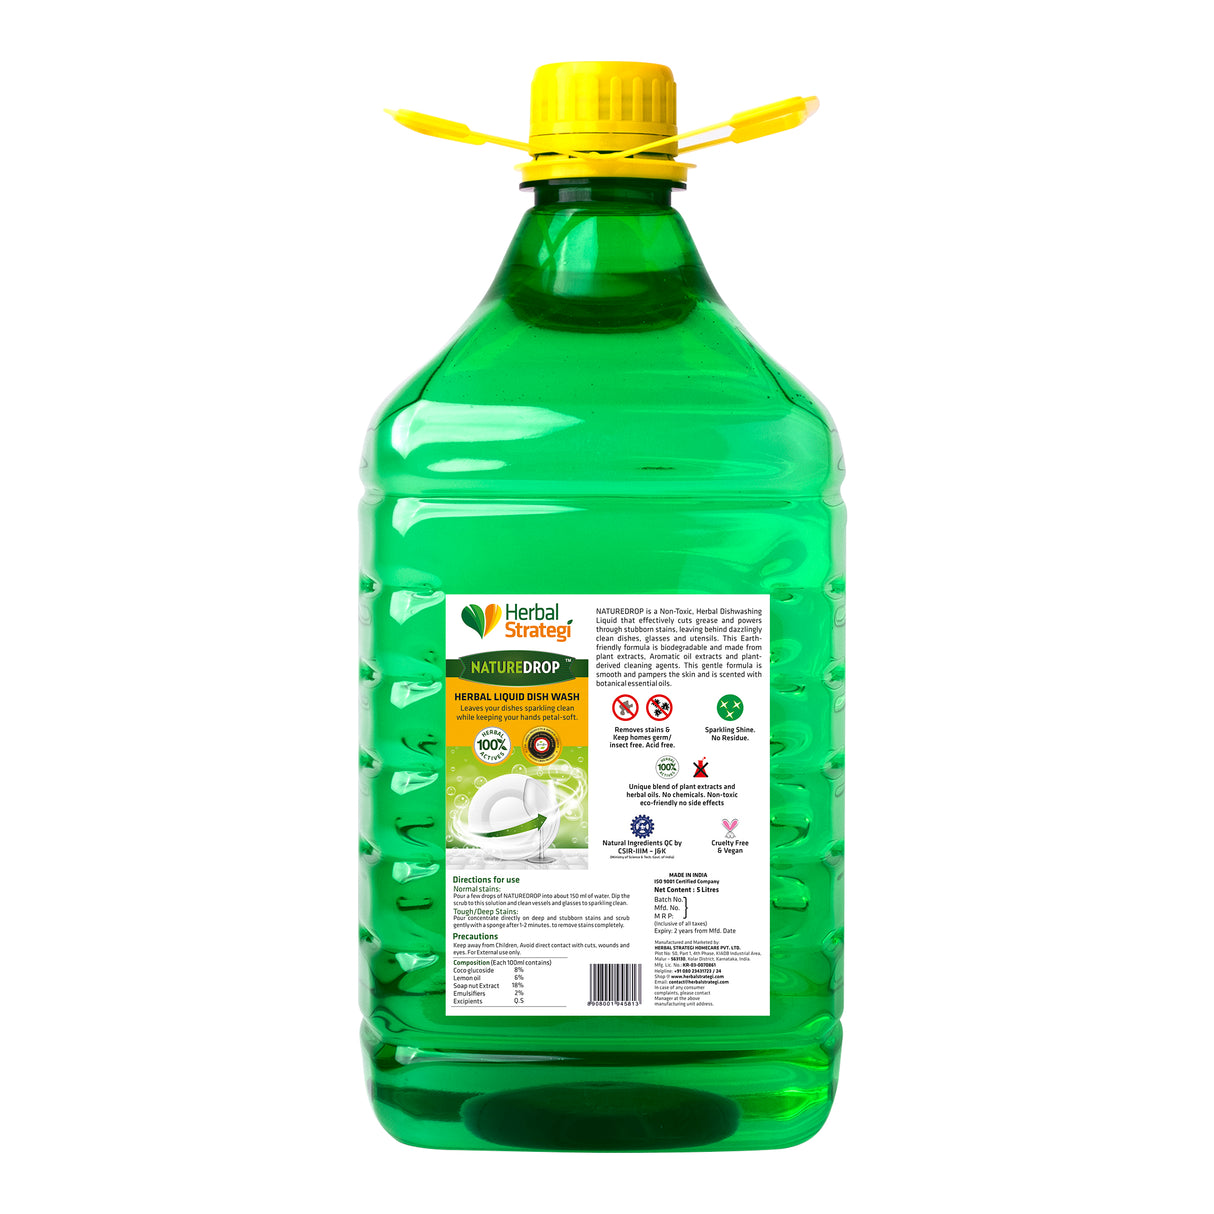 Herbal Dishwashing Liquid | Product Size: 500 ml, 1 ltrs, 1.8 ltrs, 2 ltrs, 5 ltrs